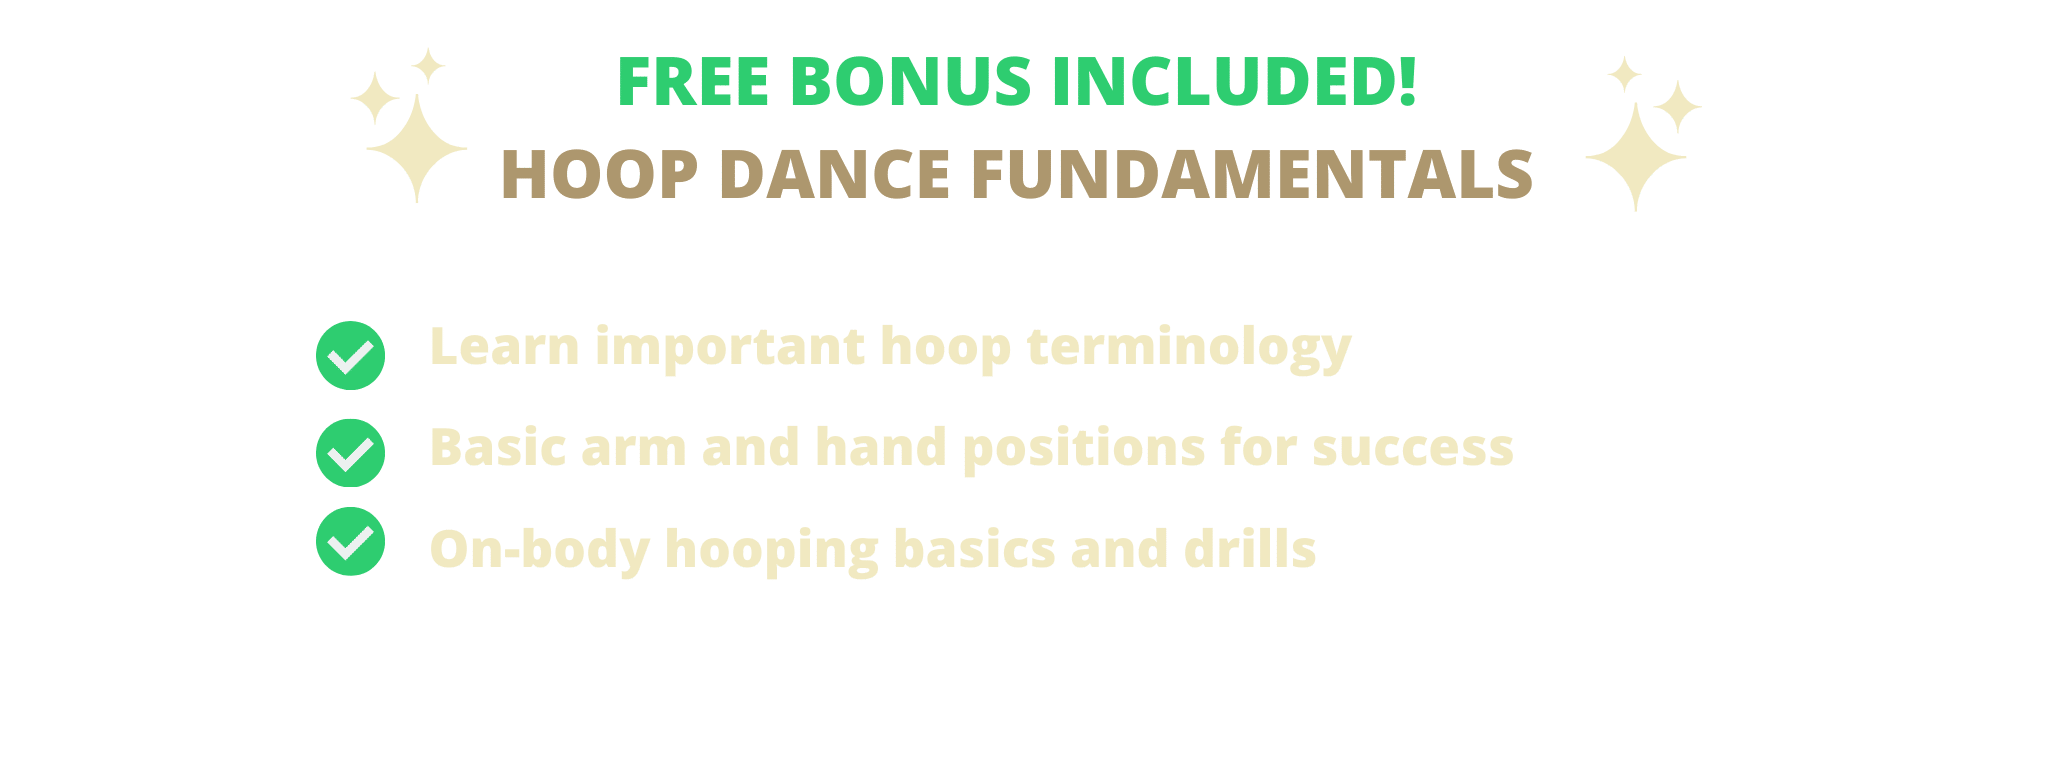 Hoop dance fundamentals